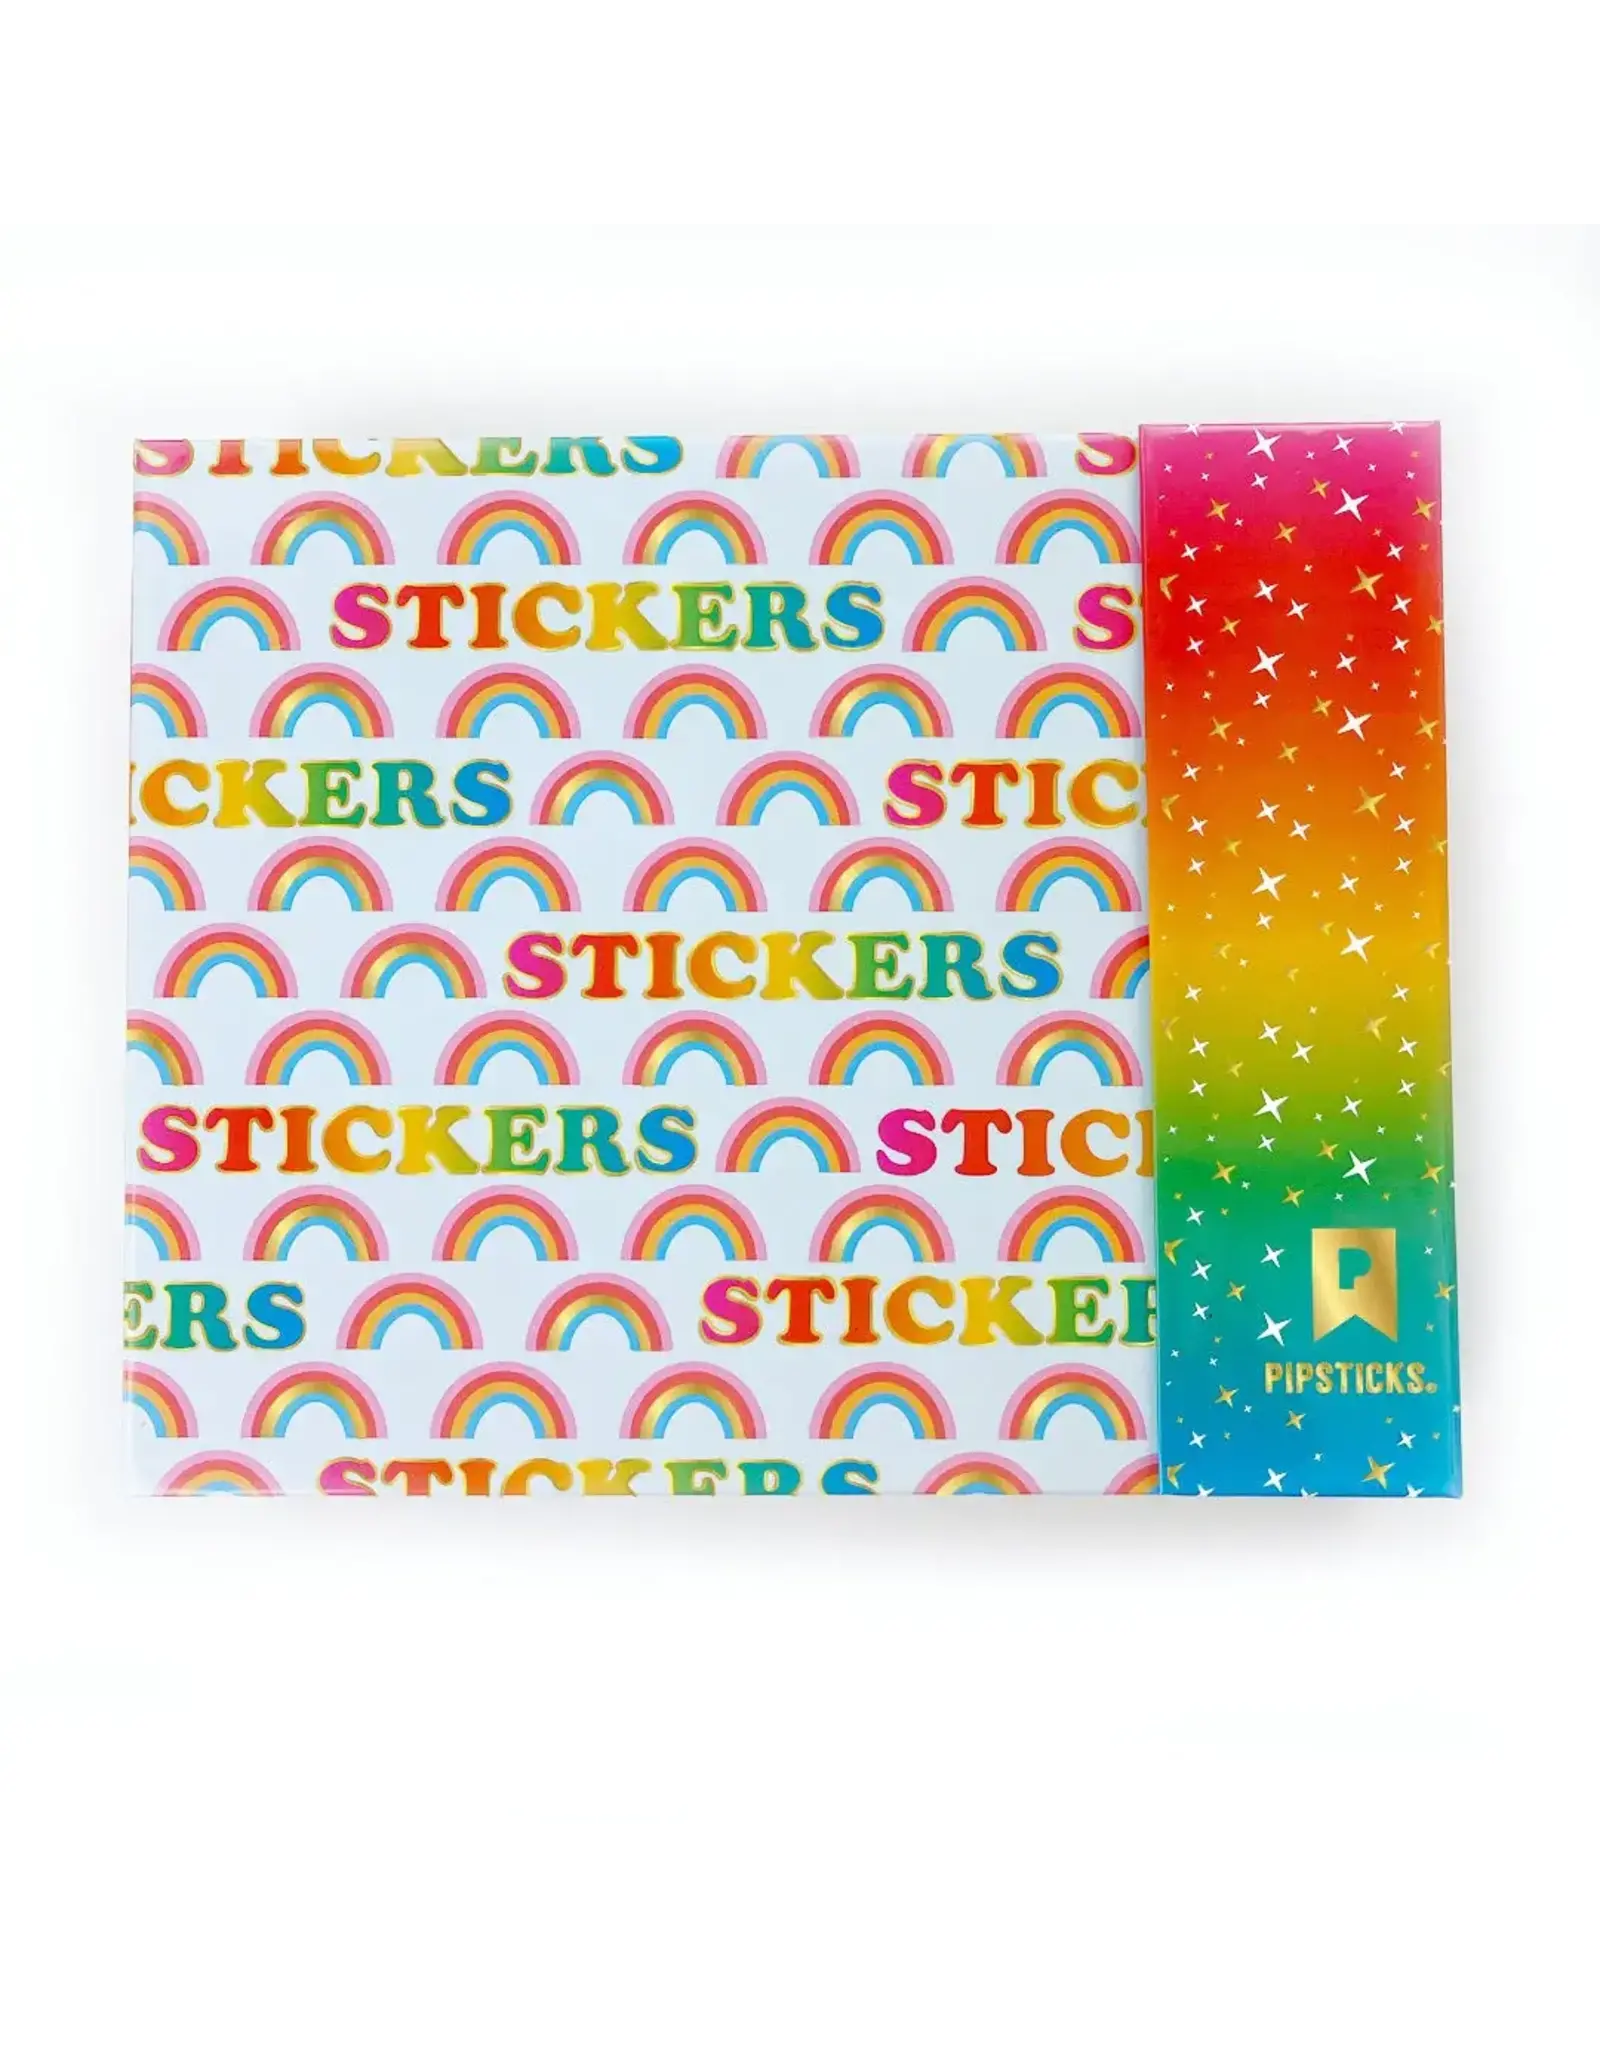 Pipsticks Rainbow Dreams Sticker Keeper